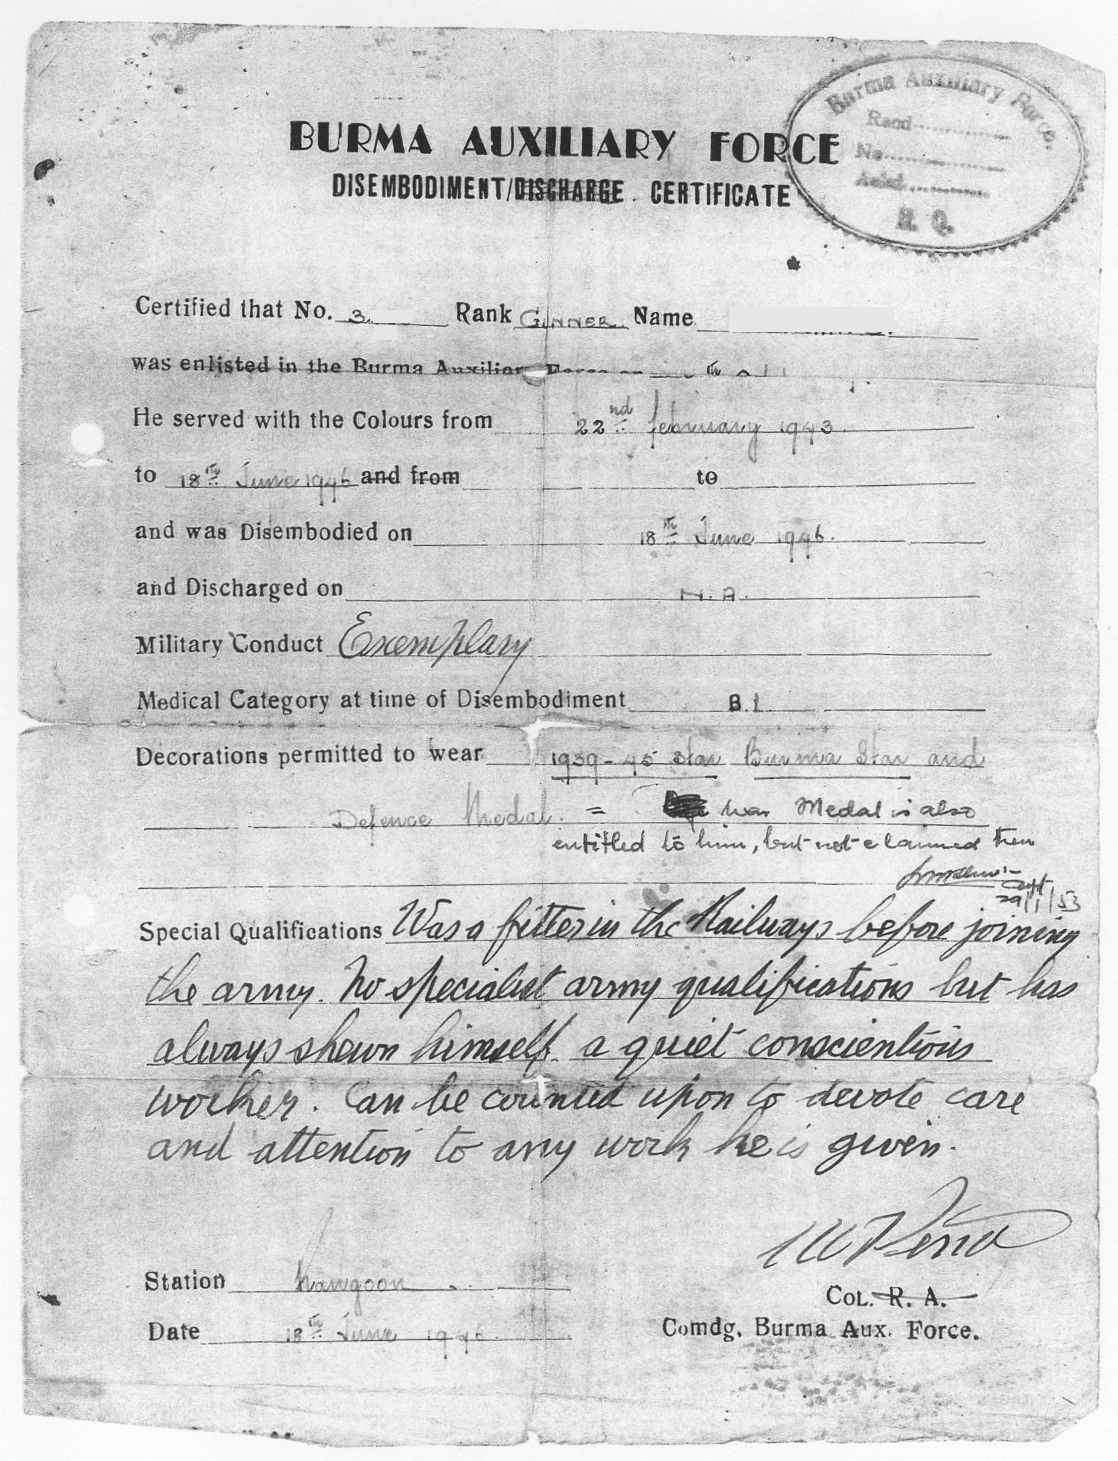 Disembodiment Certificate, Burma Auxiliary Force - June 1946.